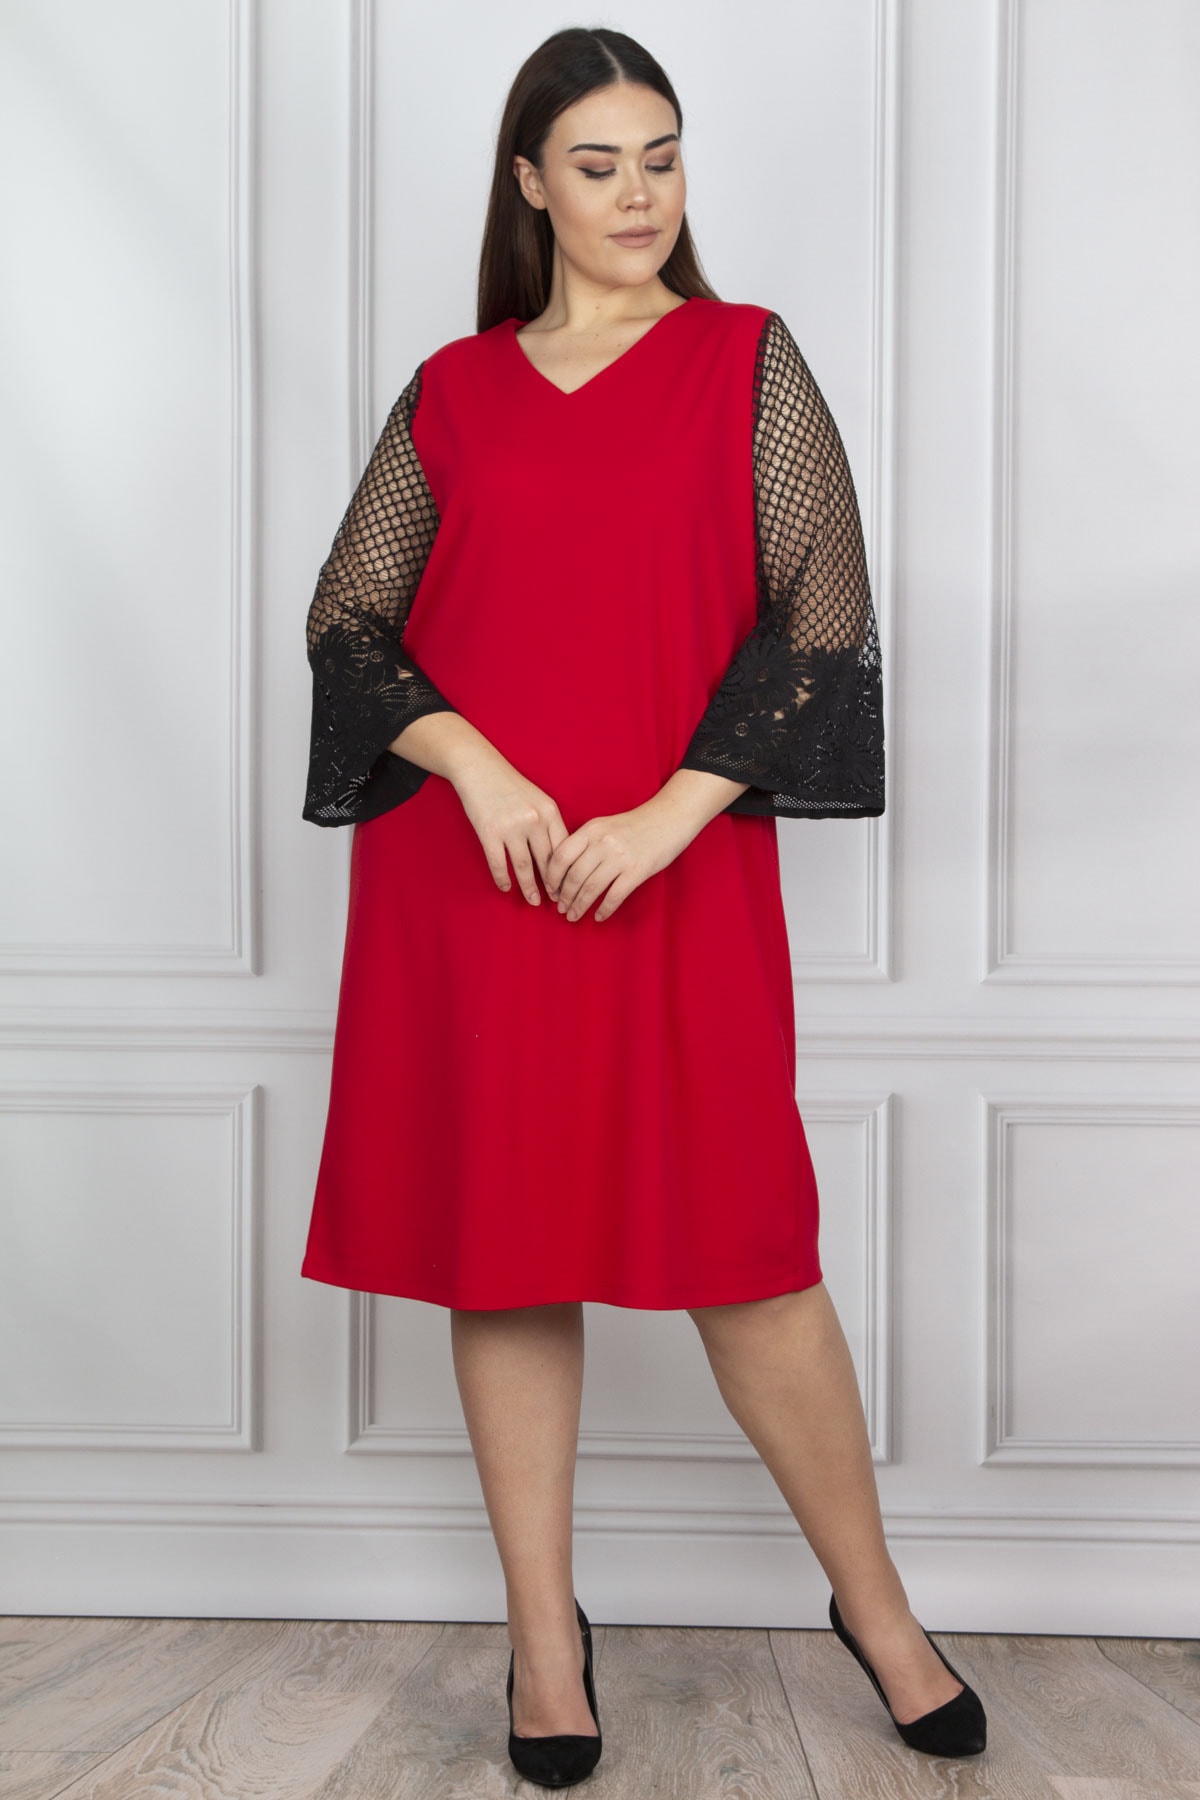 Şans Women's Plus Size Red Dress With Lace Detail